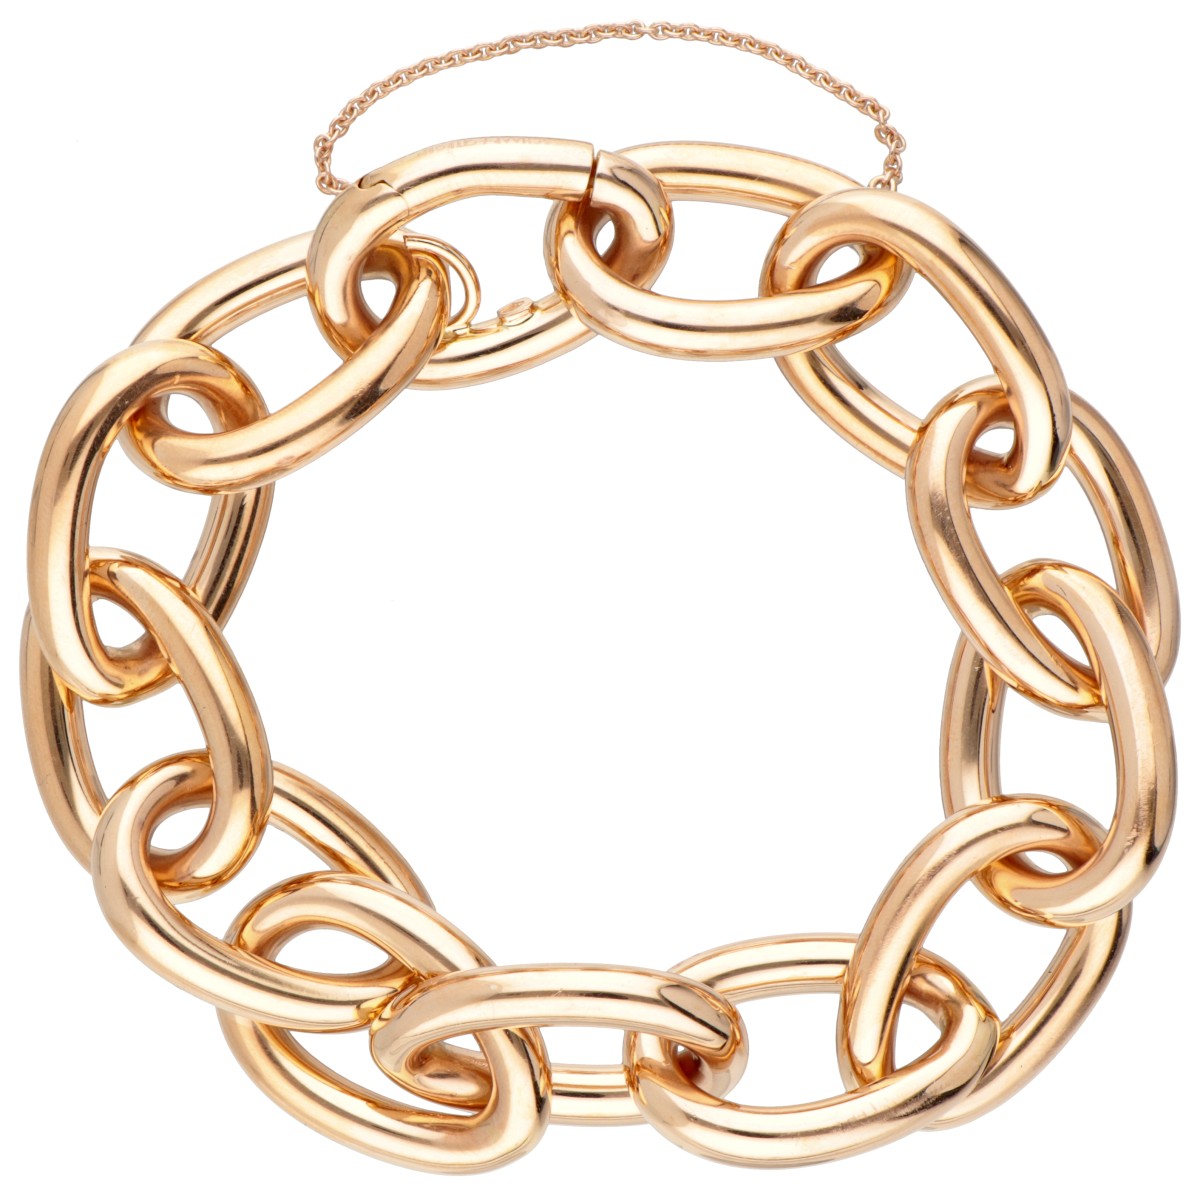 18K. Rose gold Schaap en Citroen gourmet link bracelet.